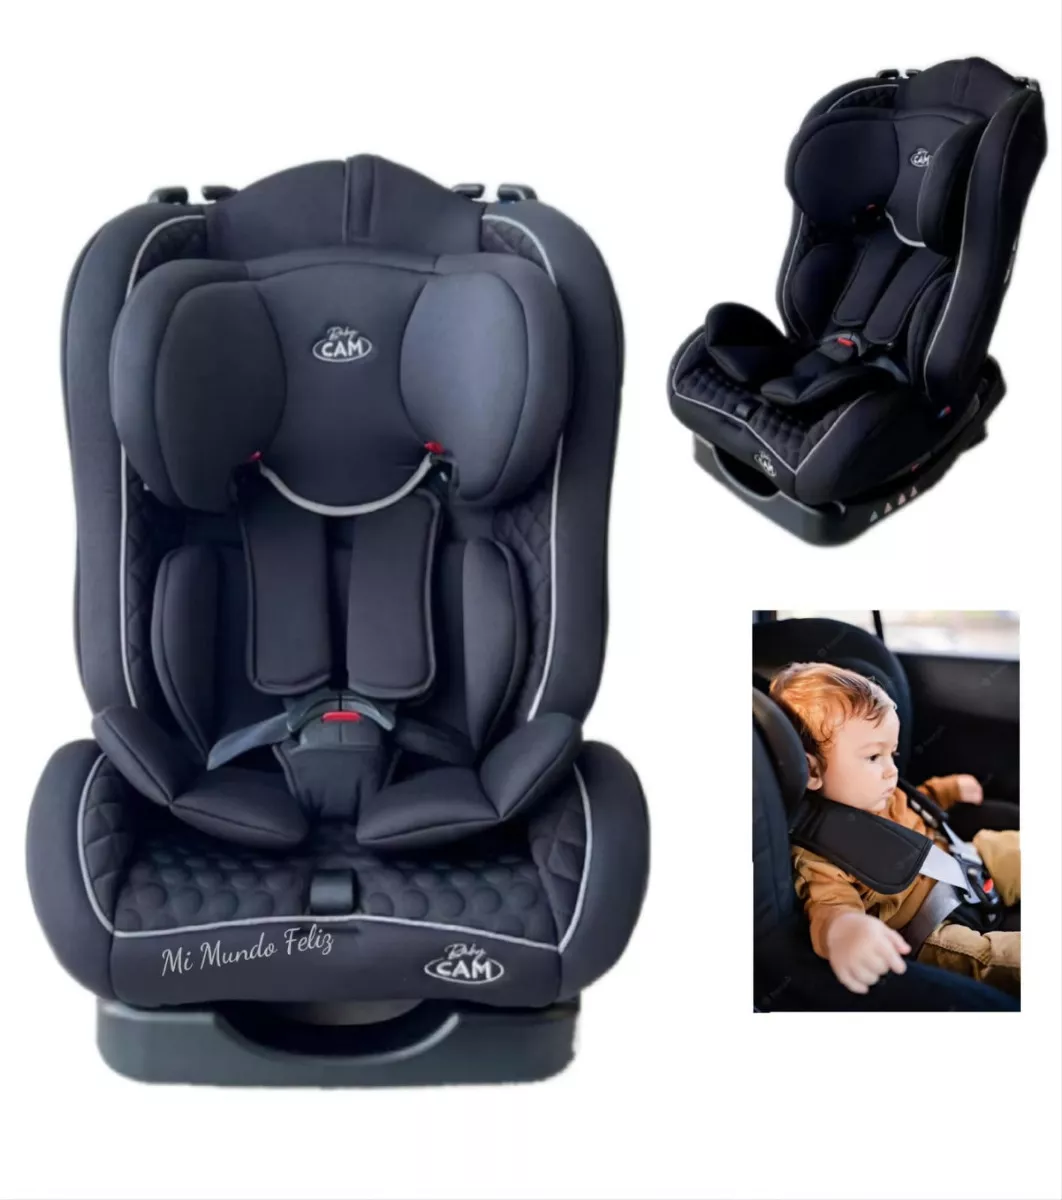 Segunda imagen para búsqueda de silla de carro para bebe